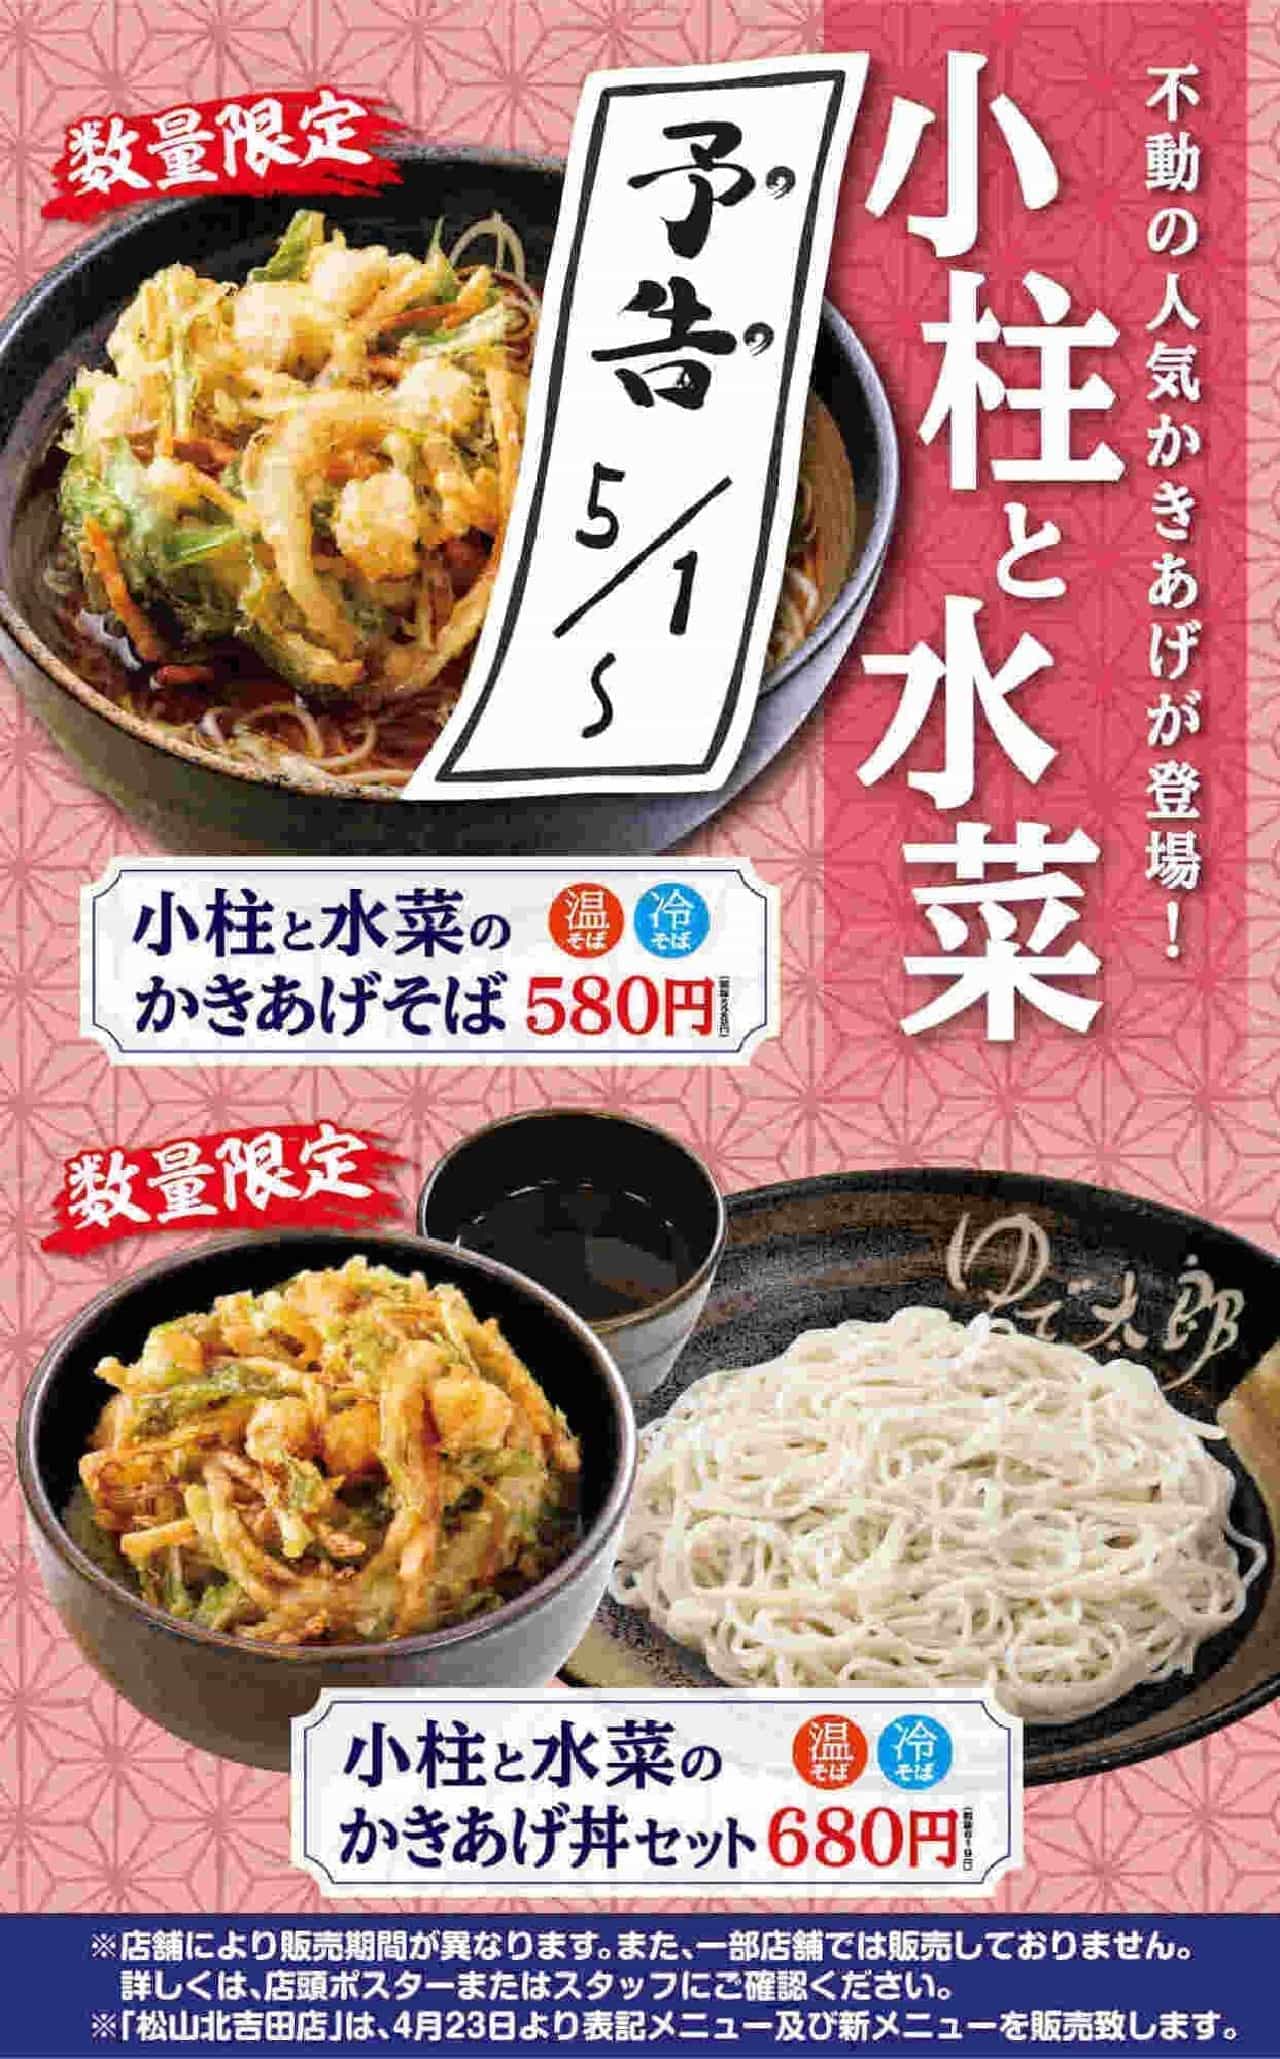 Boiled Taro "Bukkake Namekoba" "Kakiage Soba with Obashira and Mizuna"